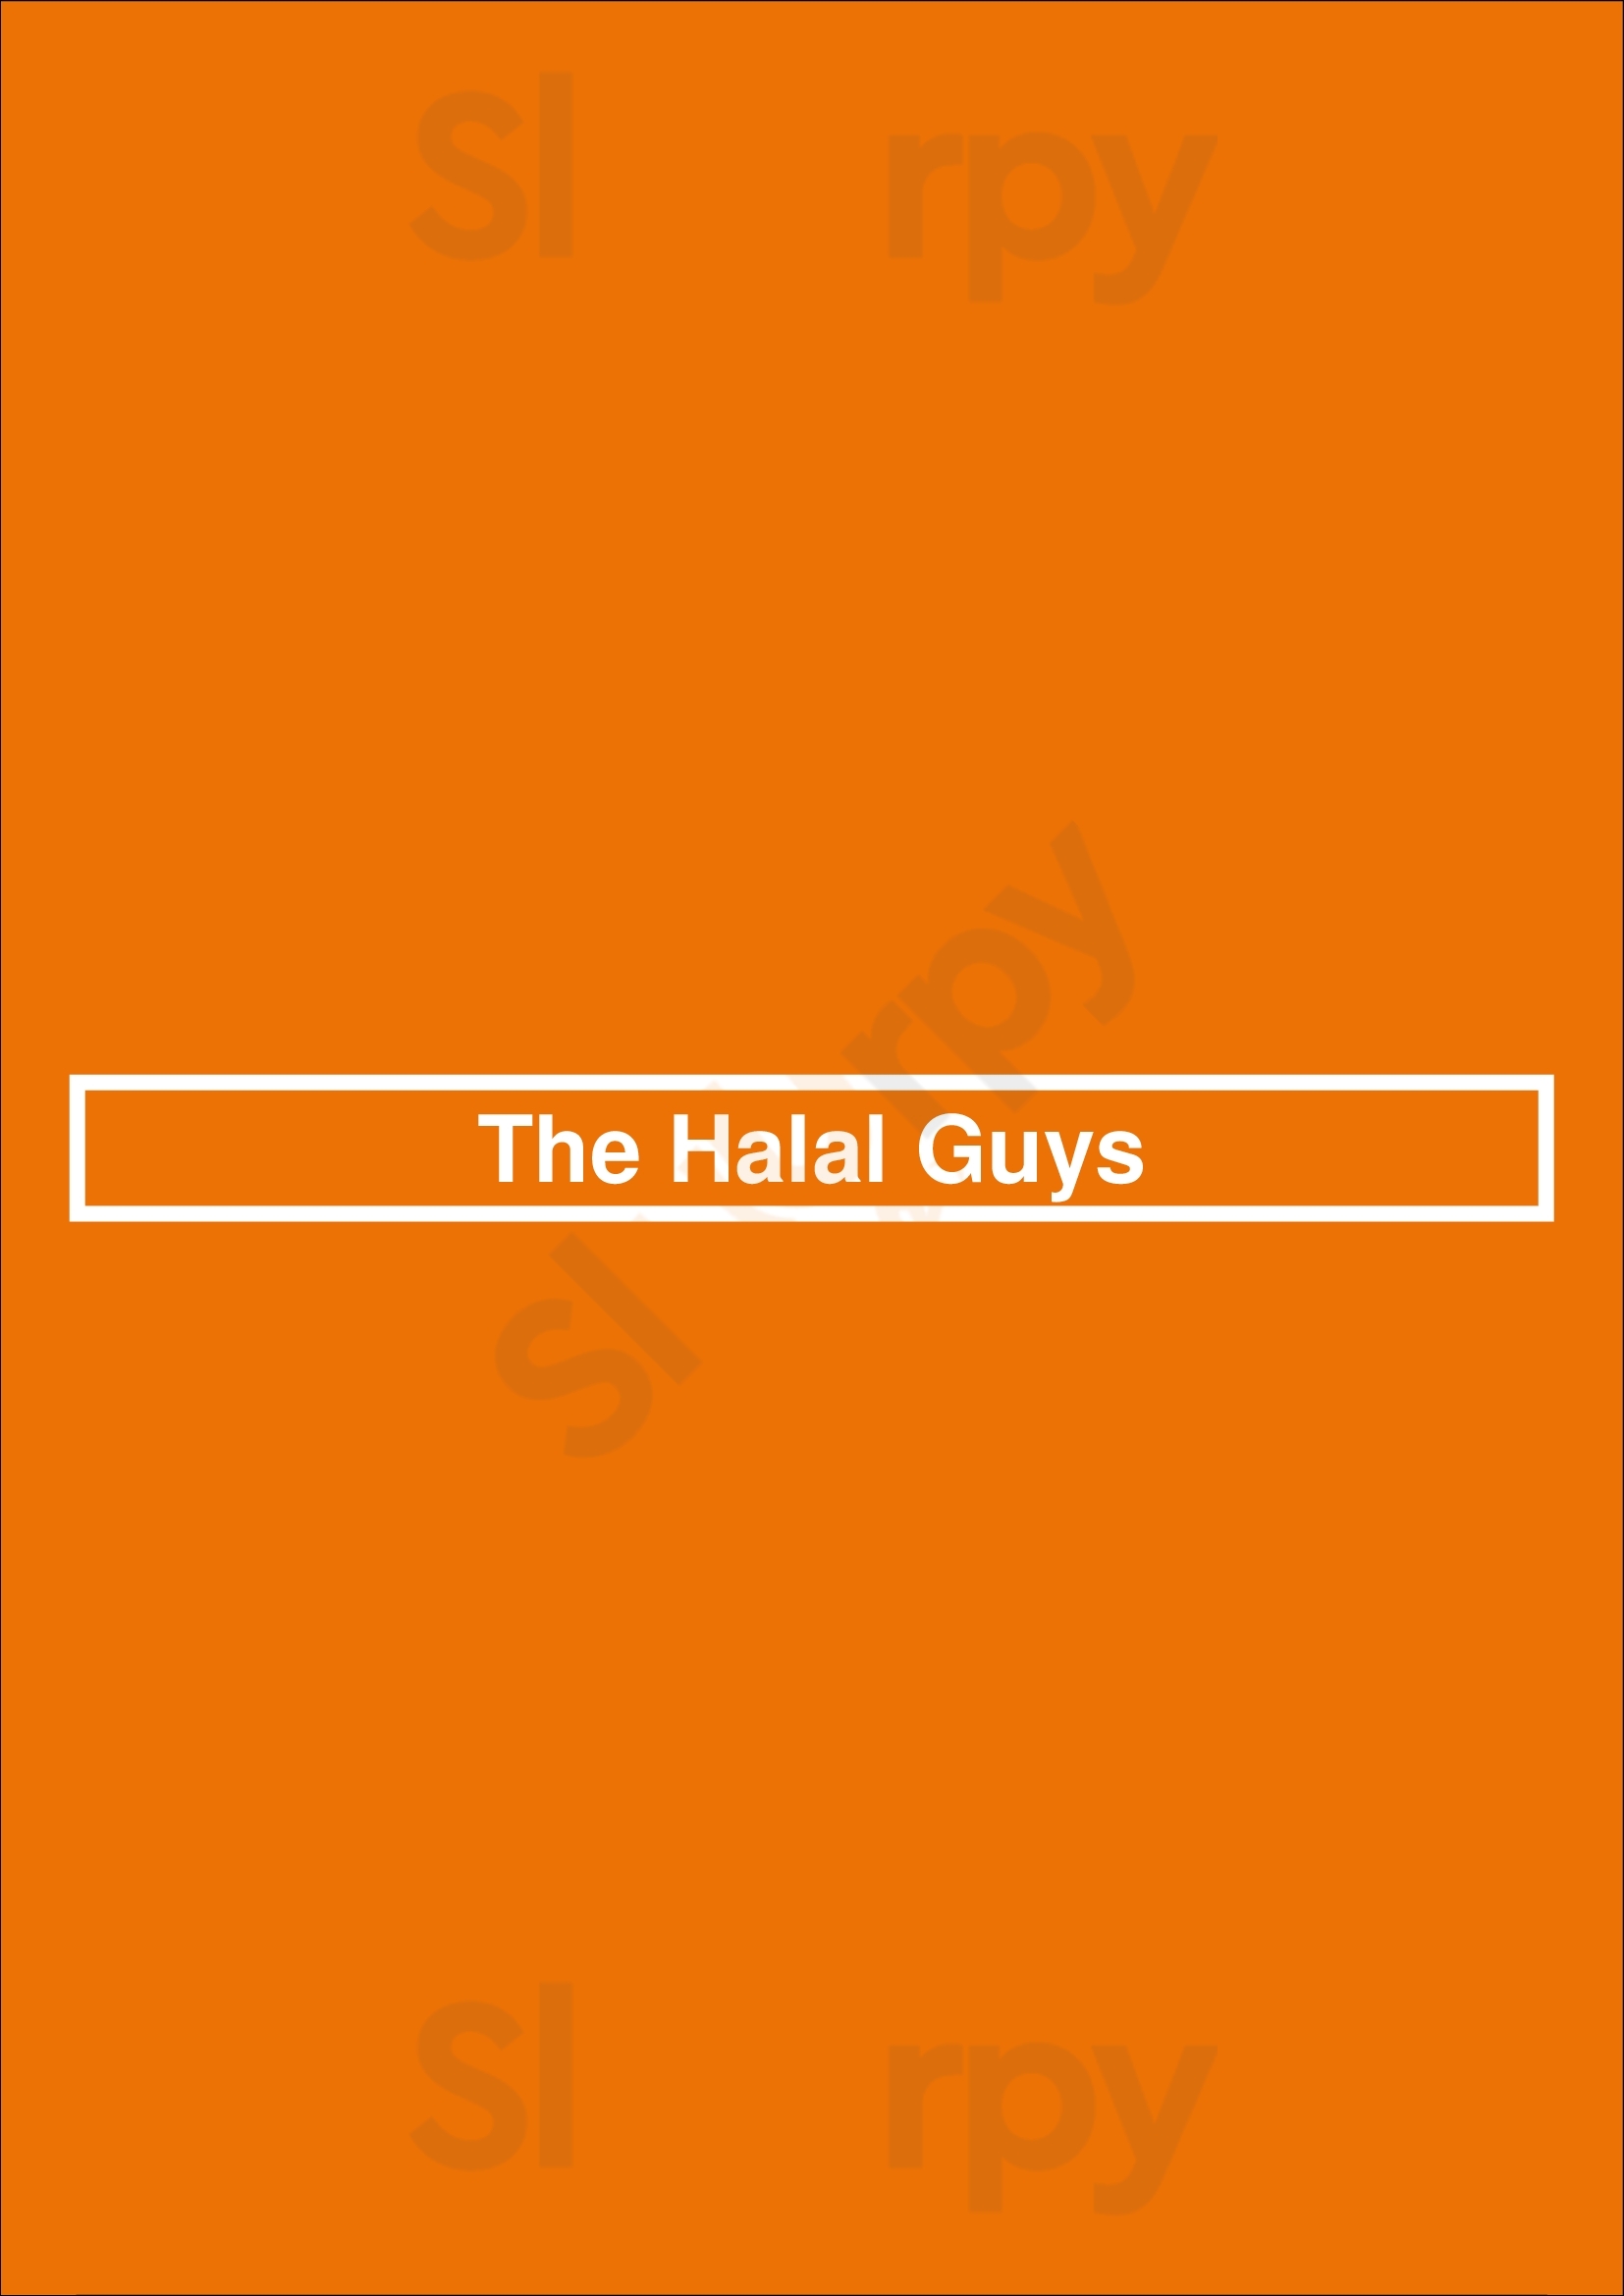 The Halal Guys New York City Menu - 1